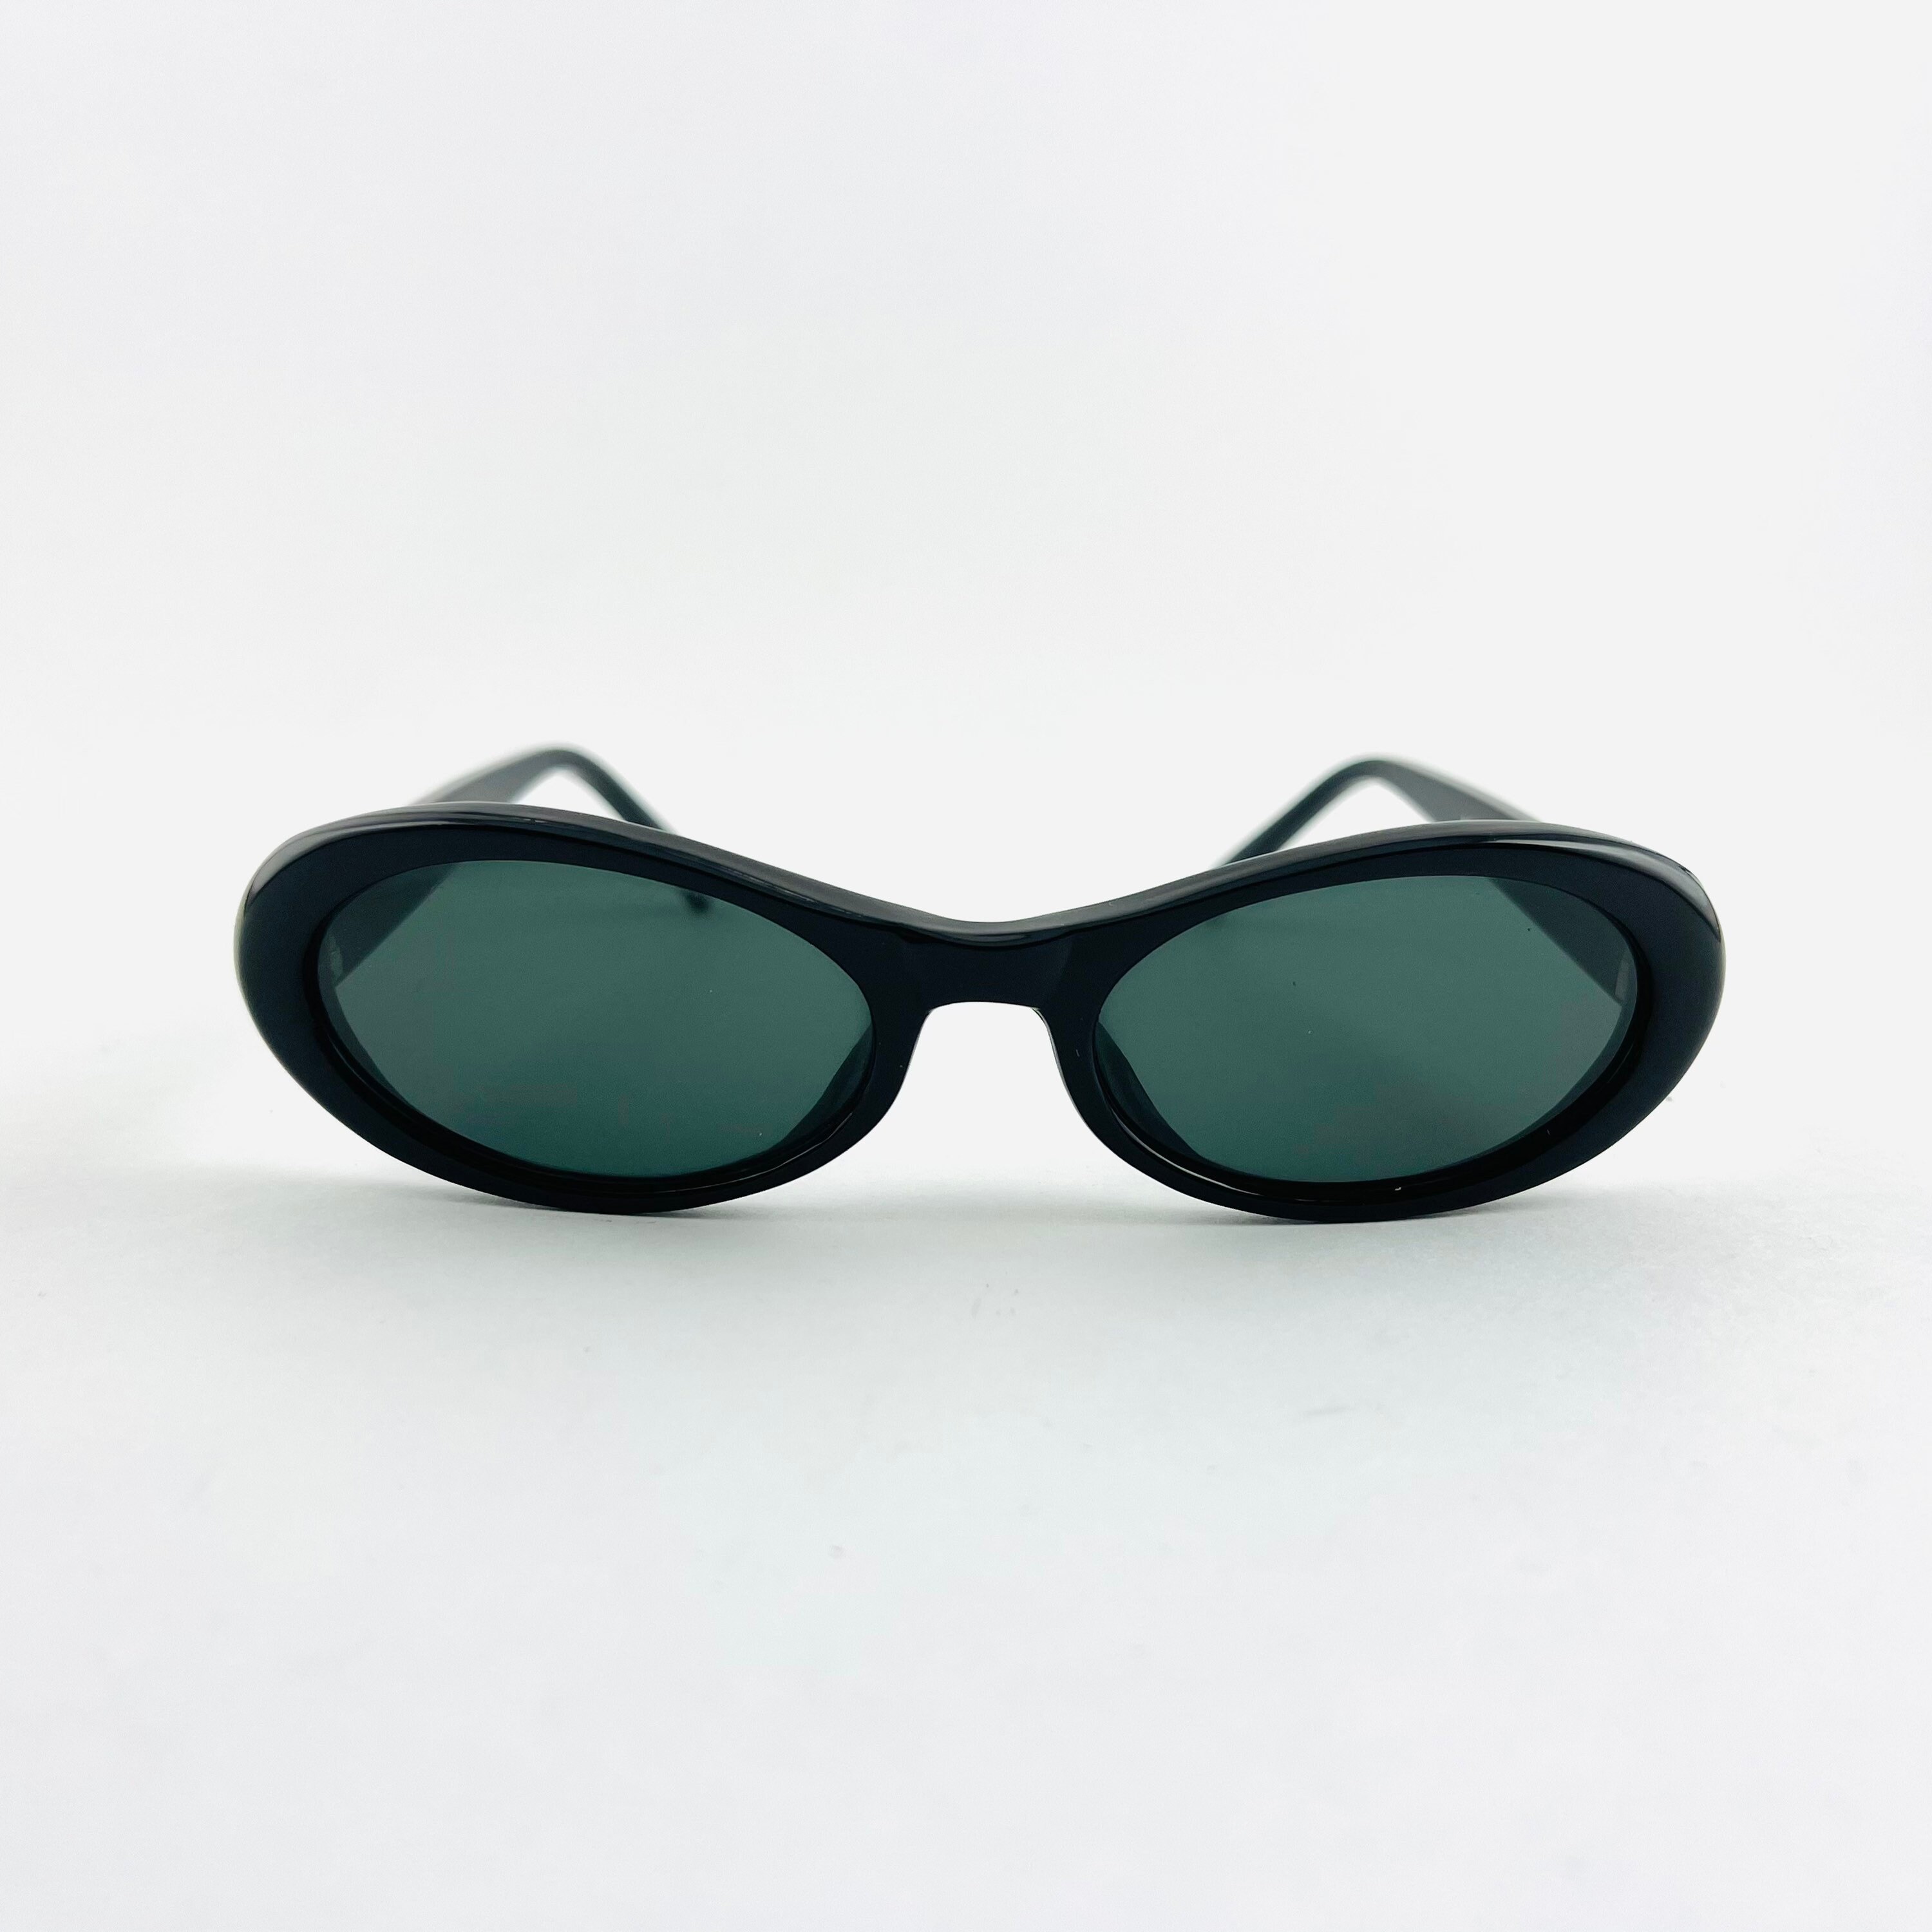 Authentic Vintage 90s Slim Black Oval Sunglasses - Etsy